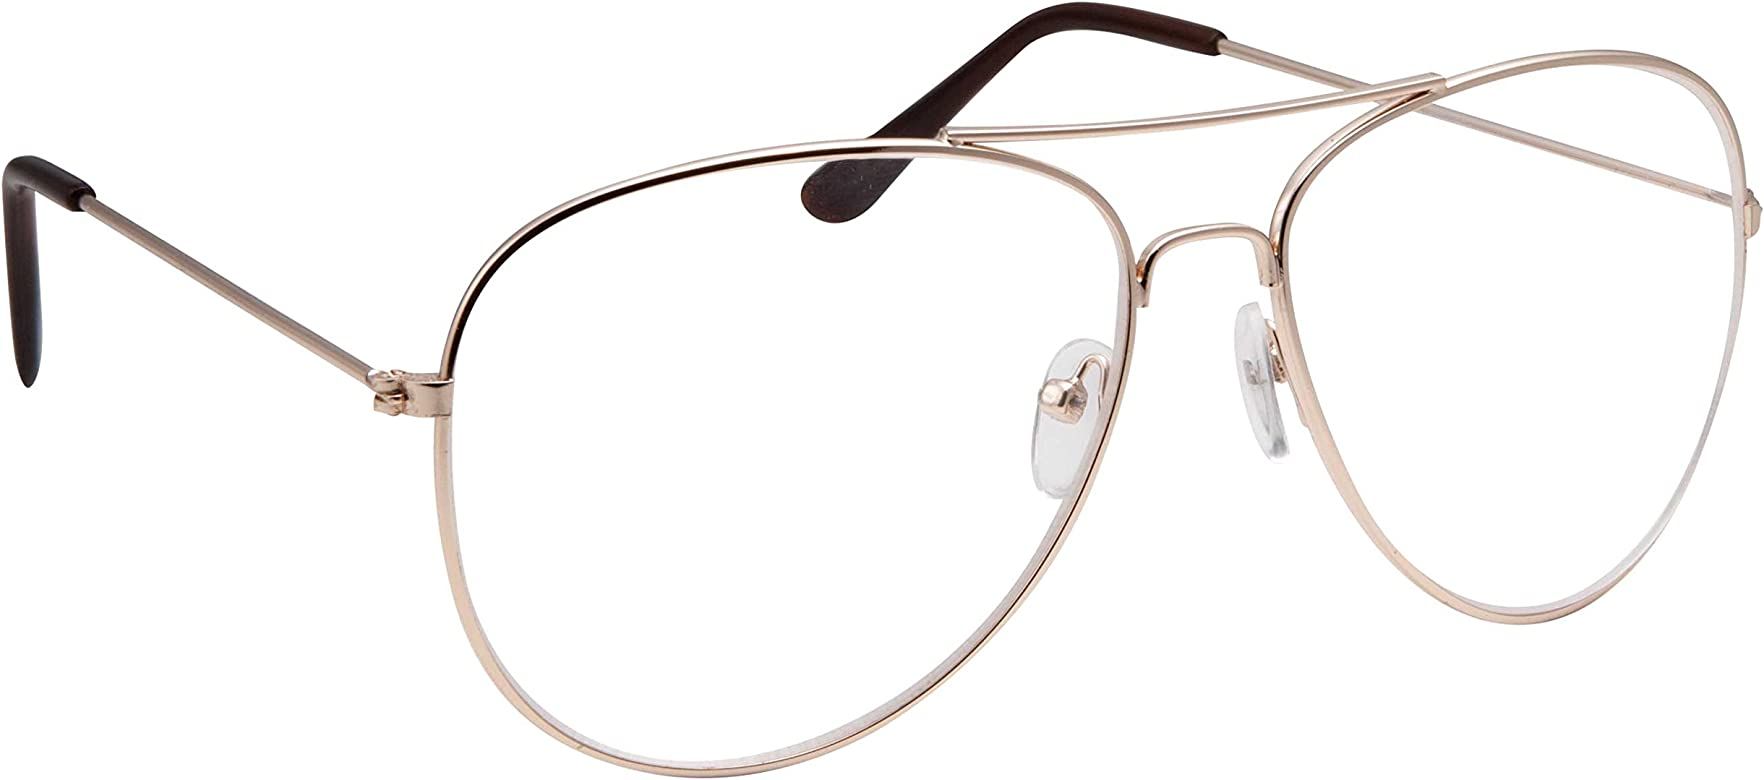 grinderPUNCH New Non-Prescription Premium Aviator Clear Lens Glasses Gold | Amazon (US)